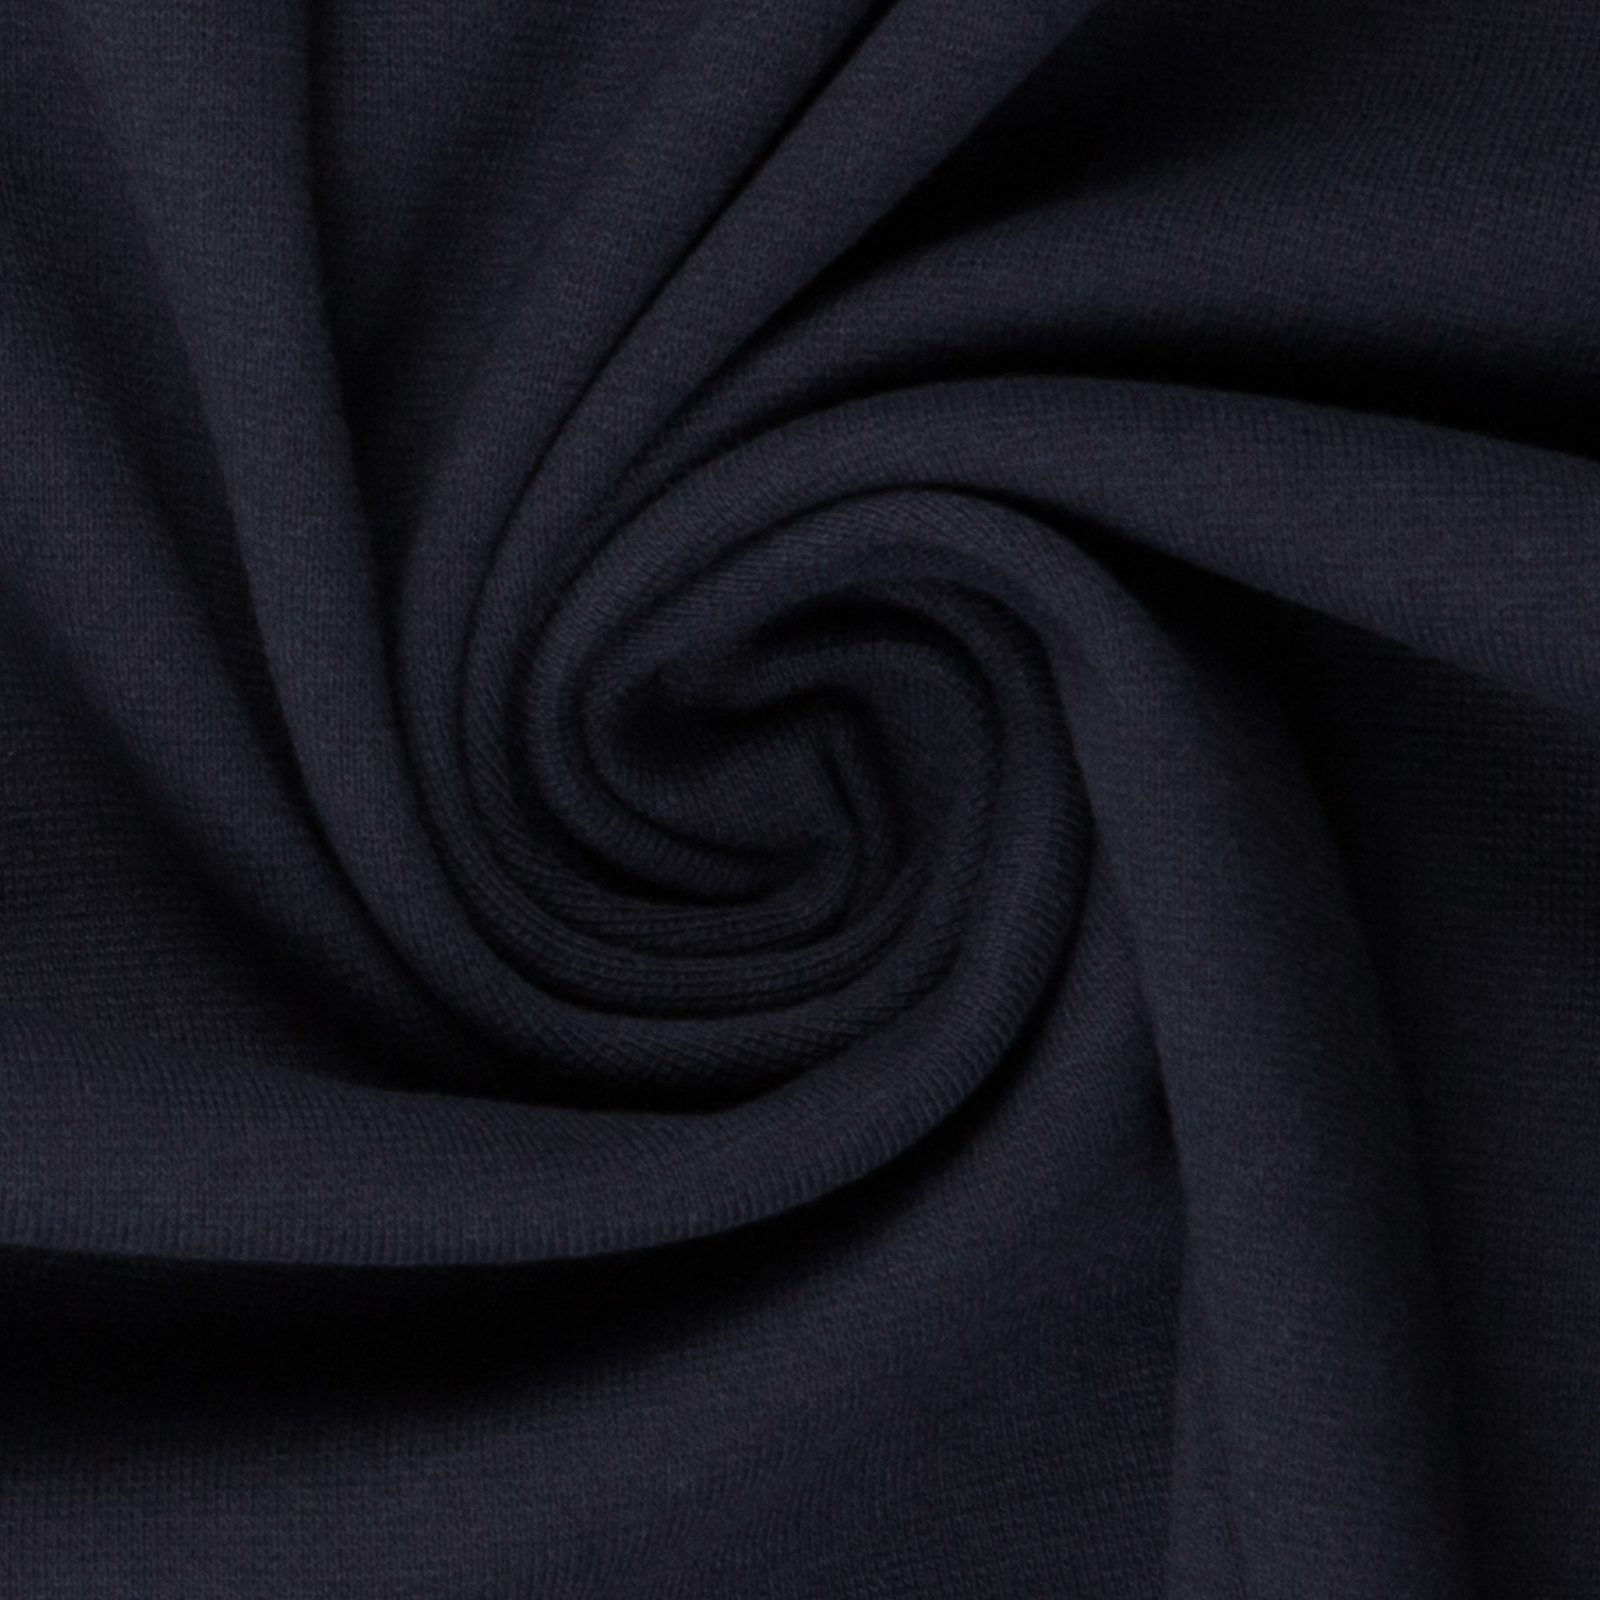 European Cotton Elastane Lycra Jersey, Solid Navy Knit Fabric